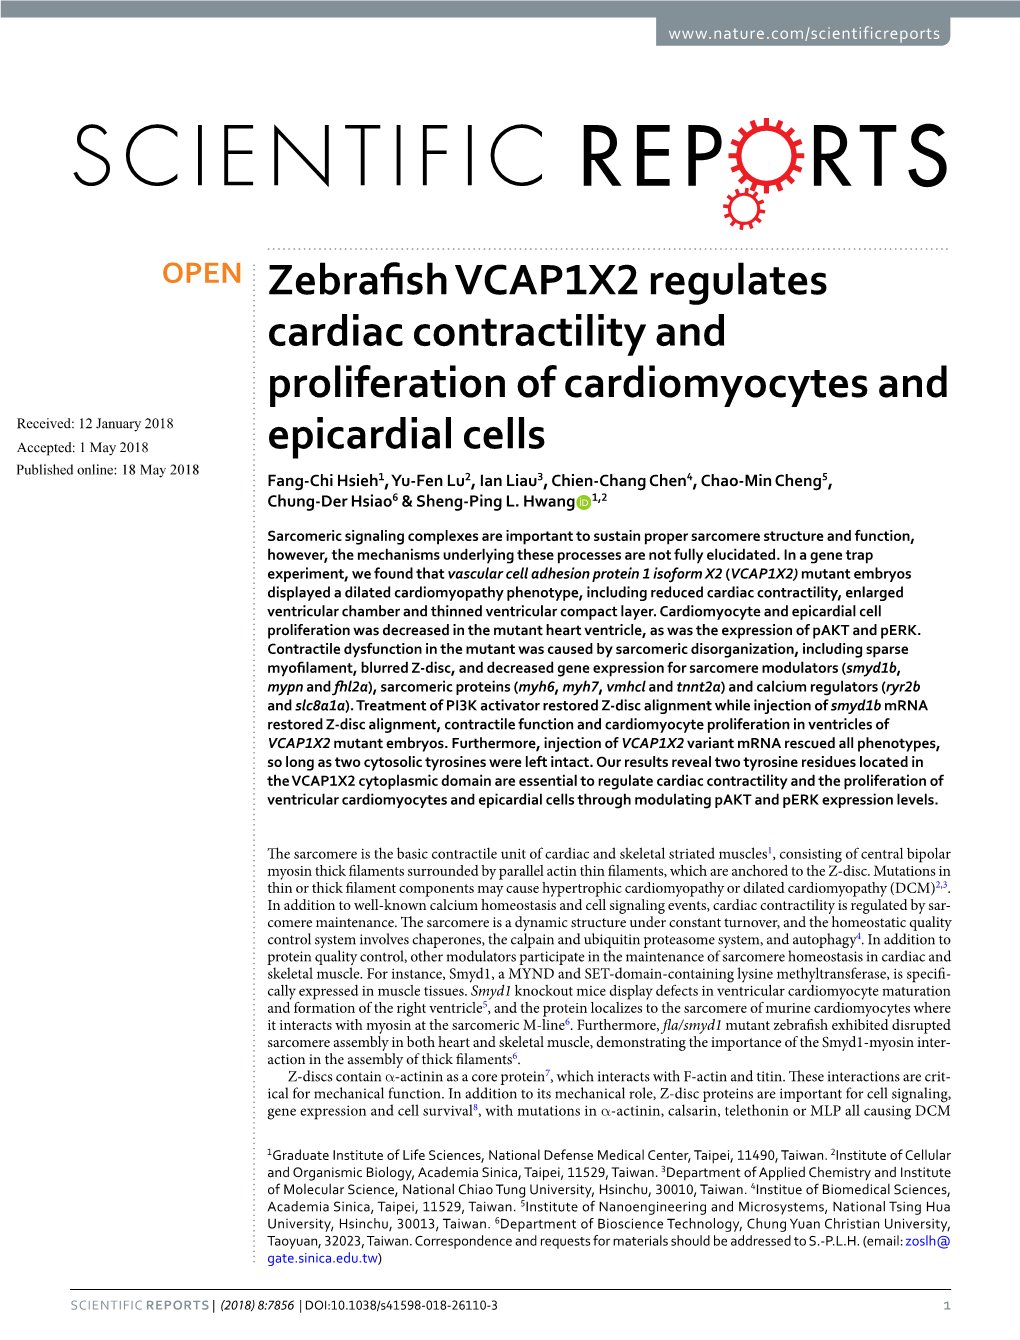 Zebrafish VCAP1X2 Regulates Cardiac Contractility and Proliferation Of